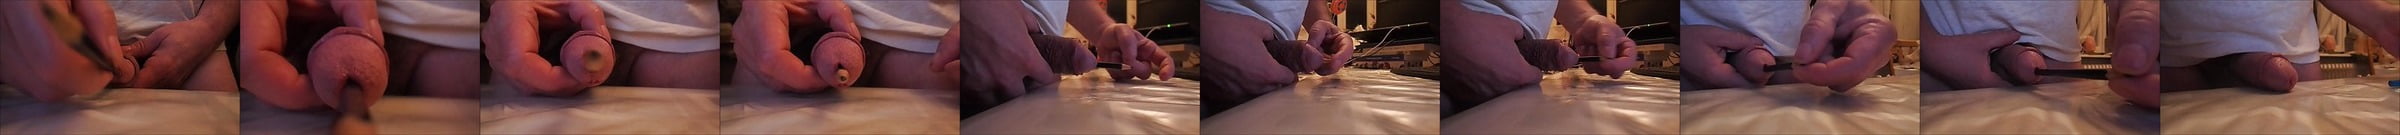 Cock Sounding 9 10mm Dilator Free Hd Videos Porn 90